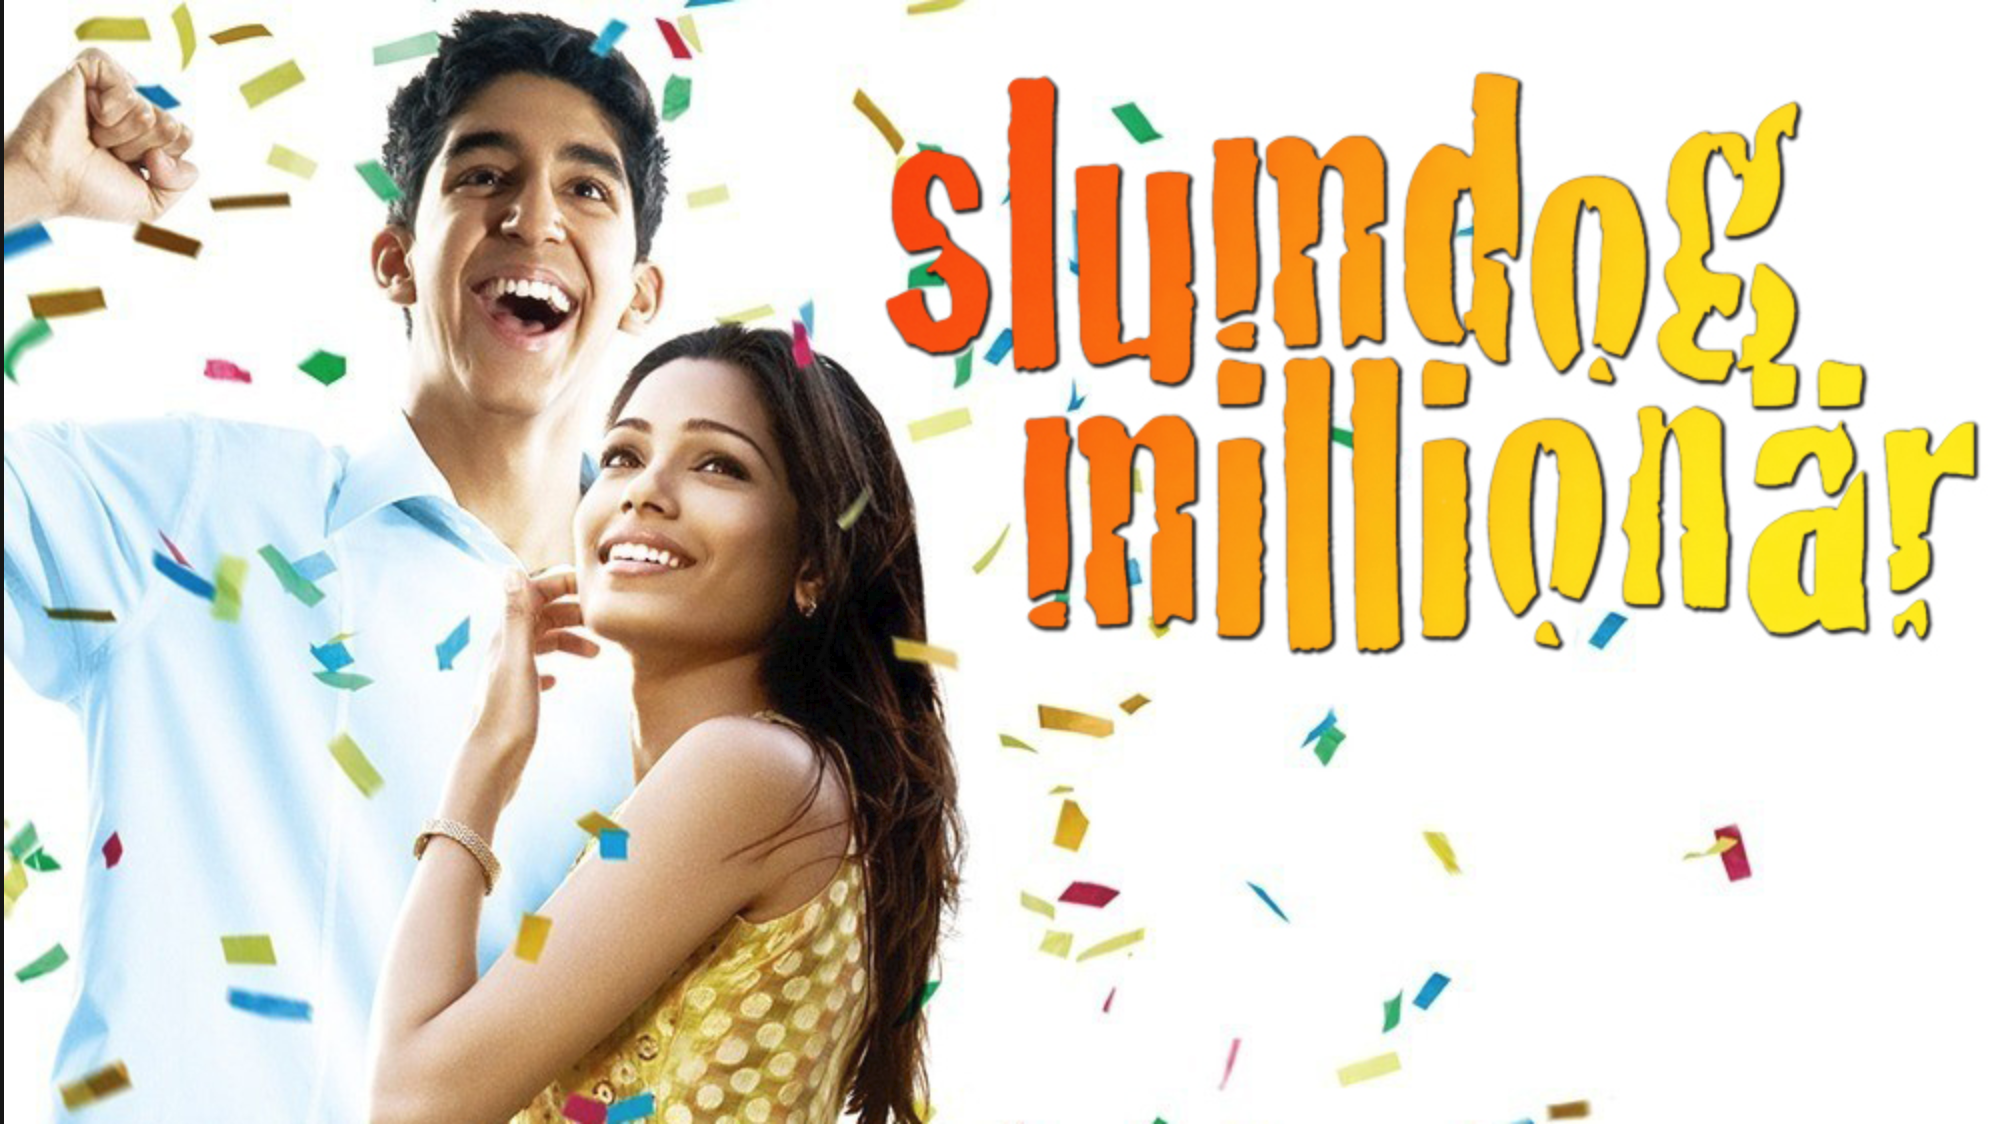 Freida Pinto and Anil Kapoor benefit from Slumdog Millionaire